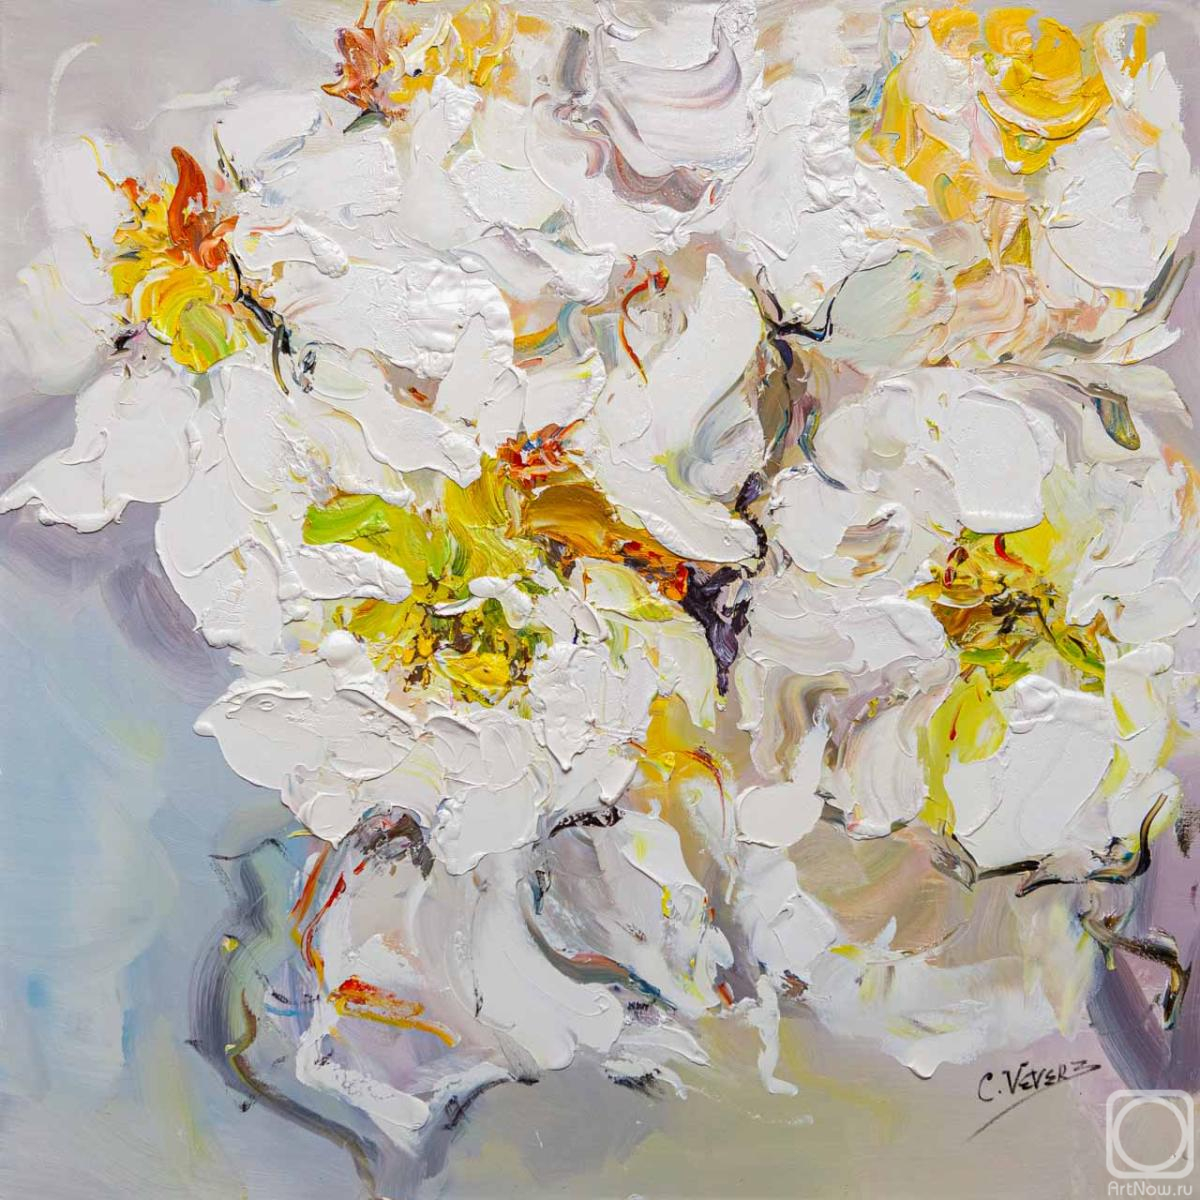 Vevers Christina. Waltz of white flowers